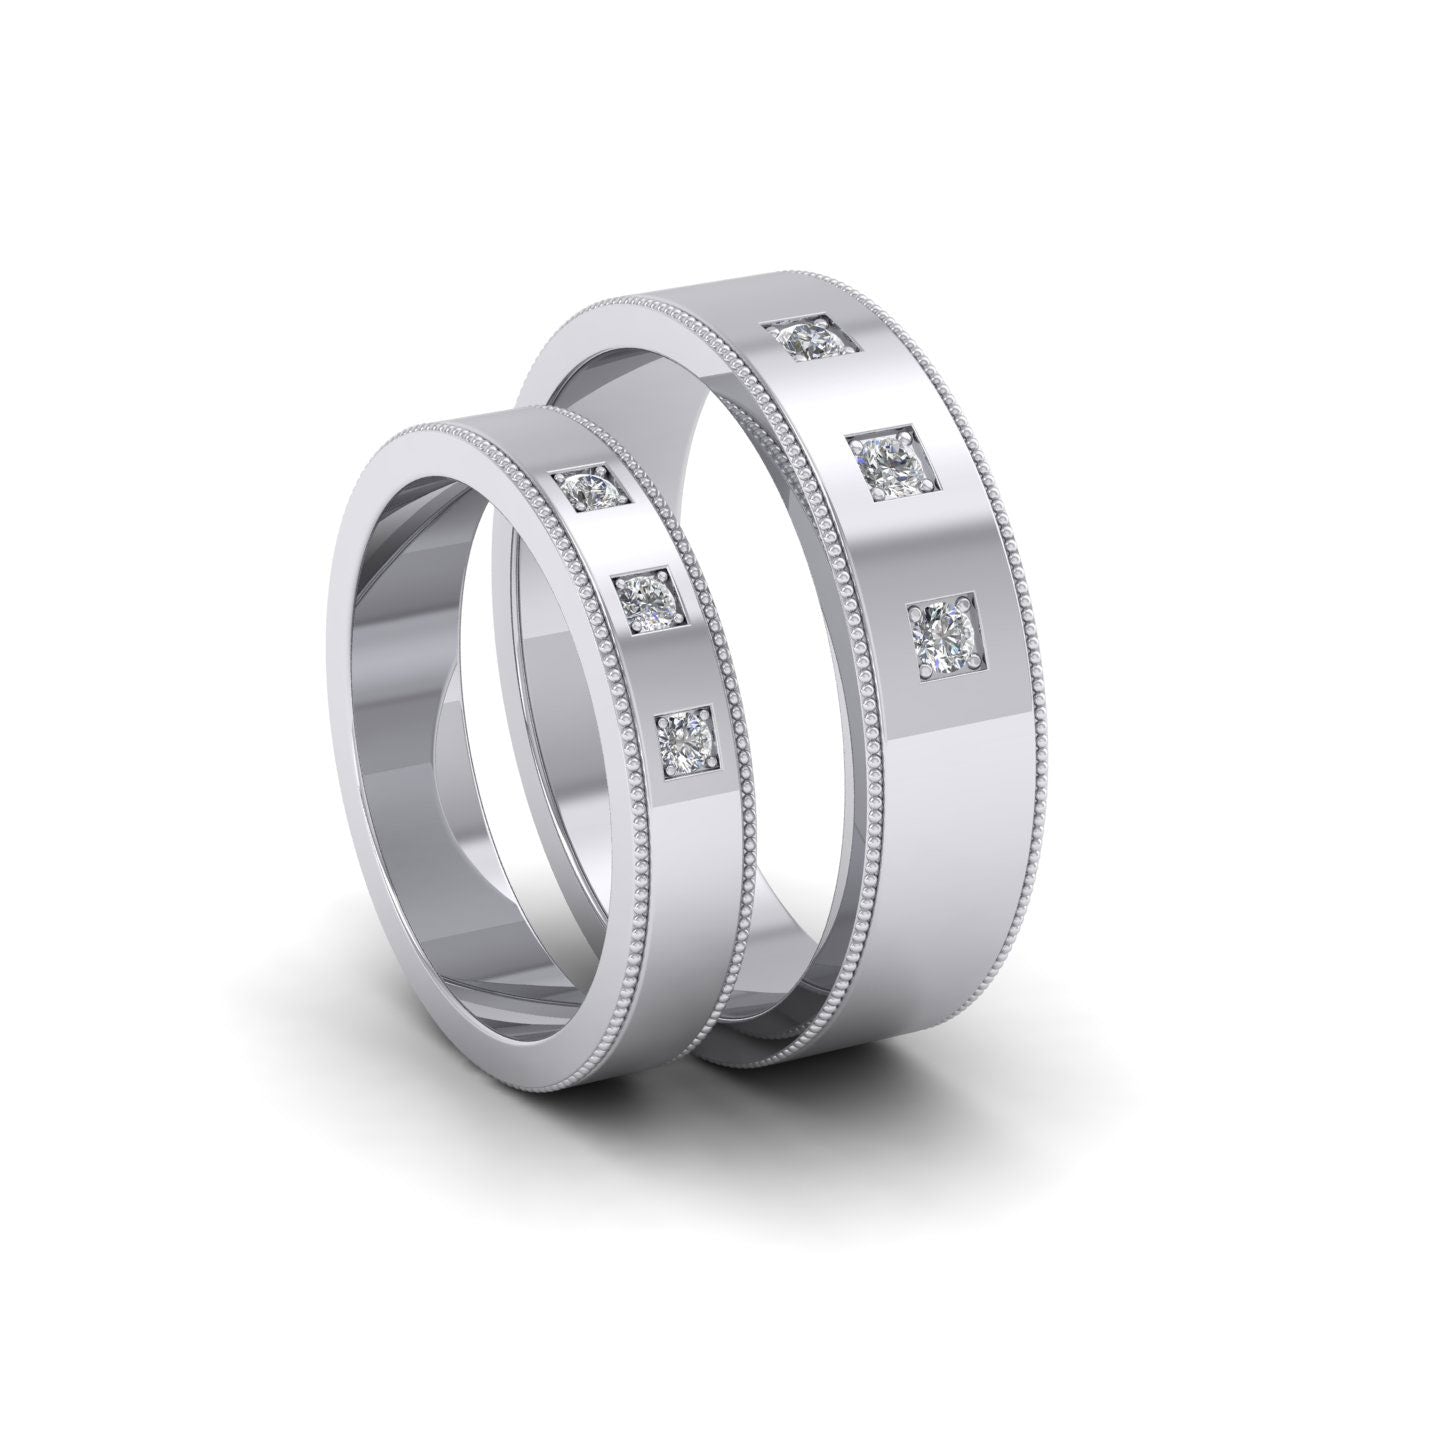 Three Diamonds With Square Setting 500 Palladium 4mm Wedding Ring With Millgrain Edge